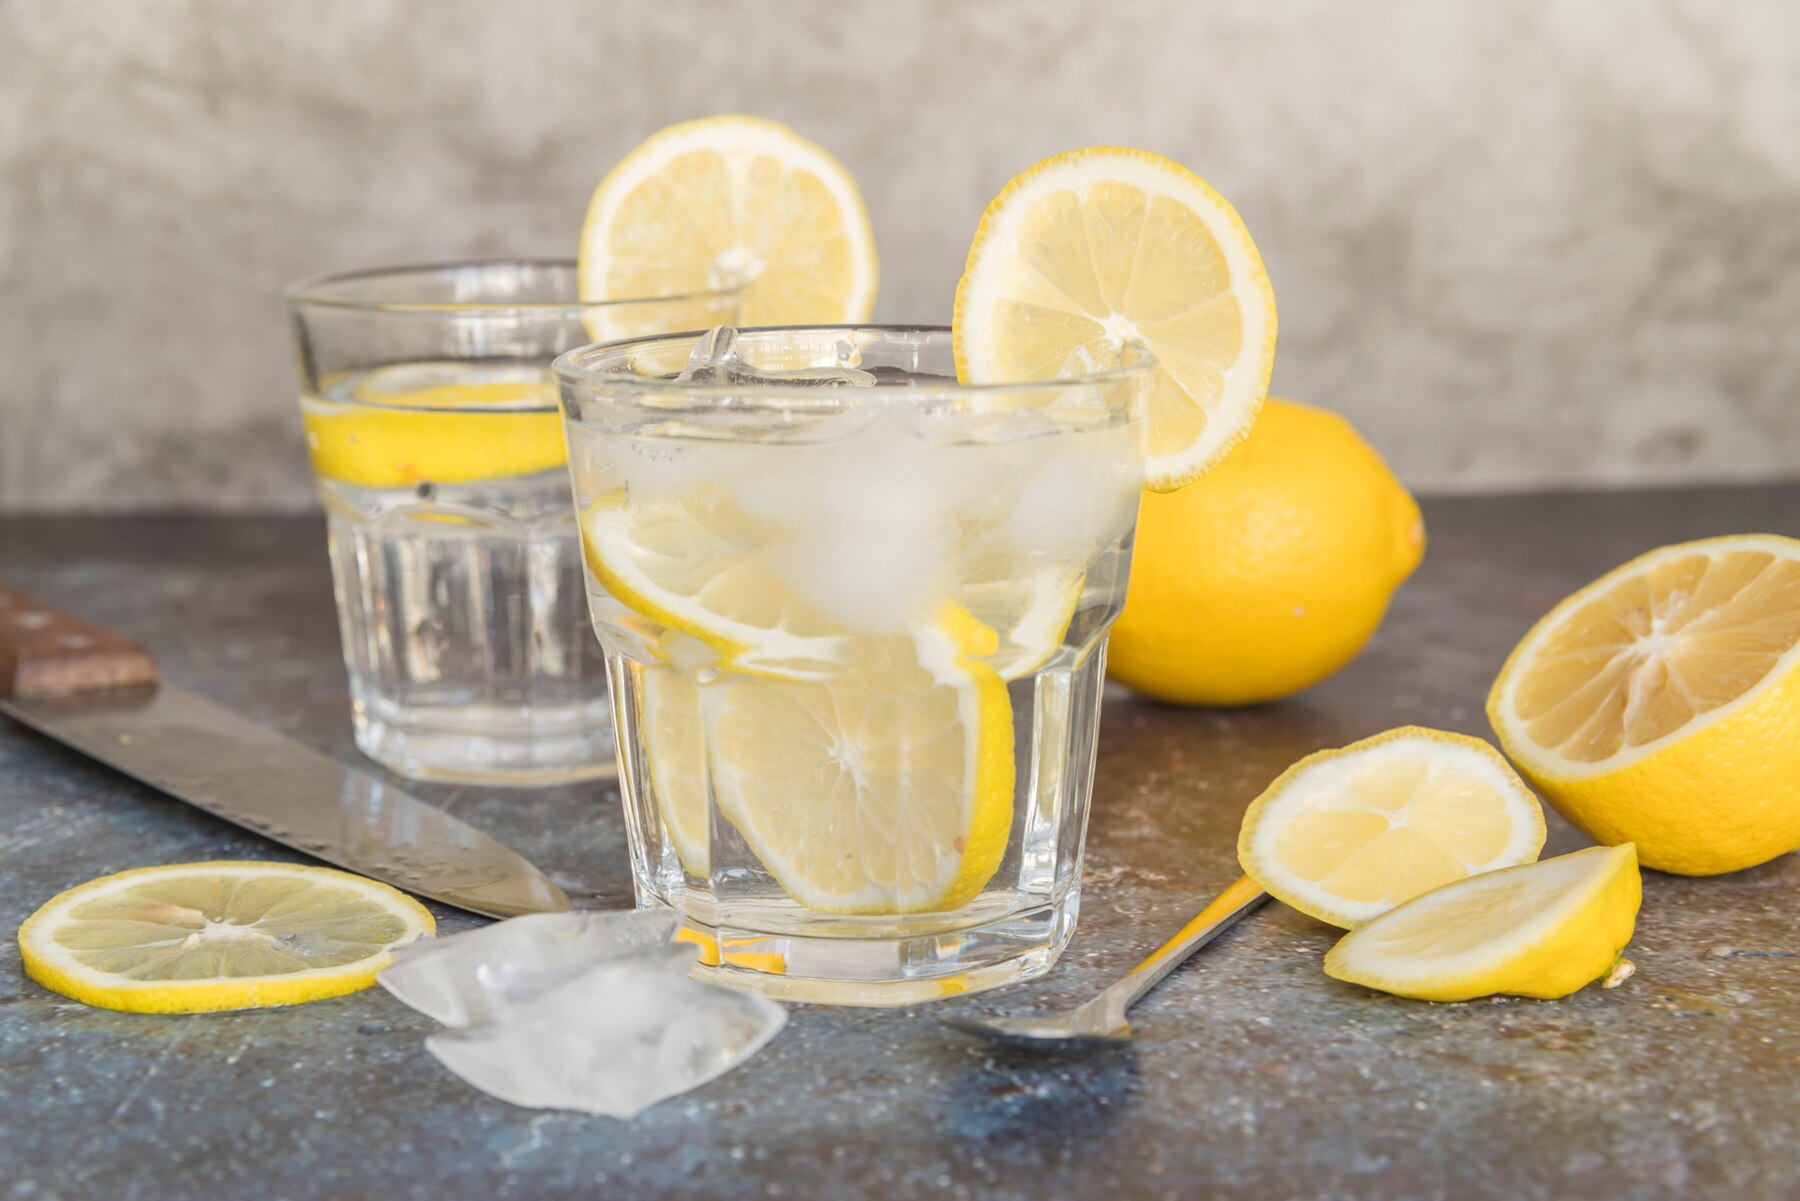 refreshing-water-with-lemon-and-ice_23-2148102602.jpg